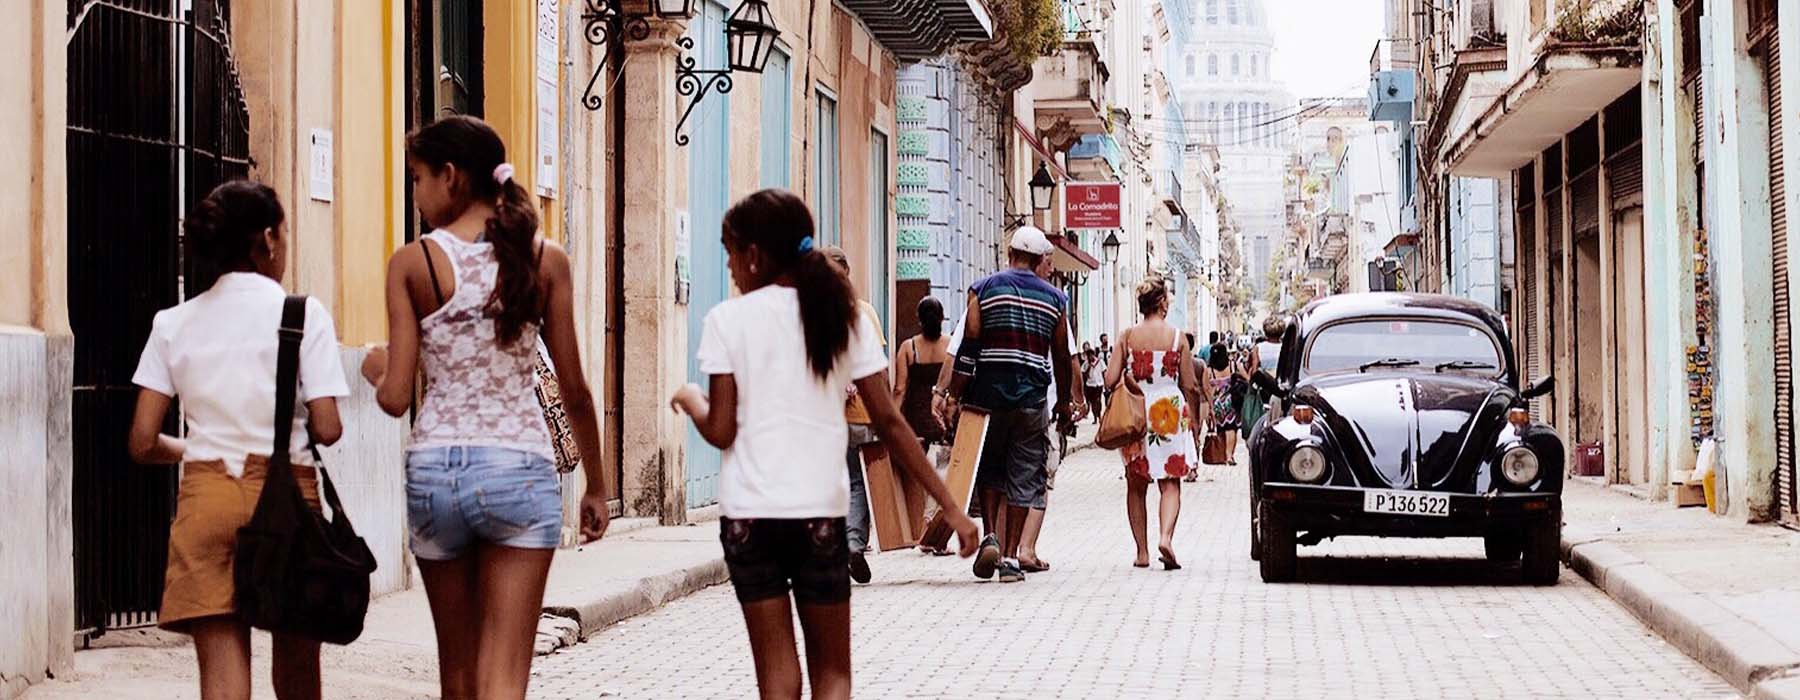  Cuba holidays